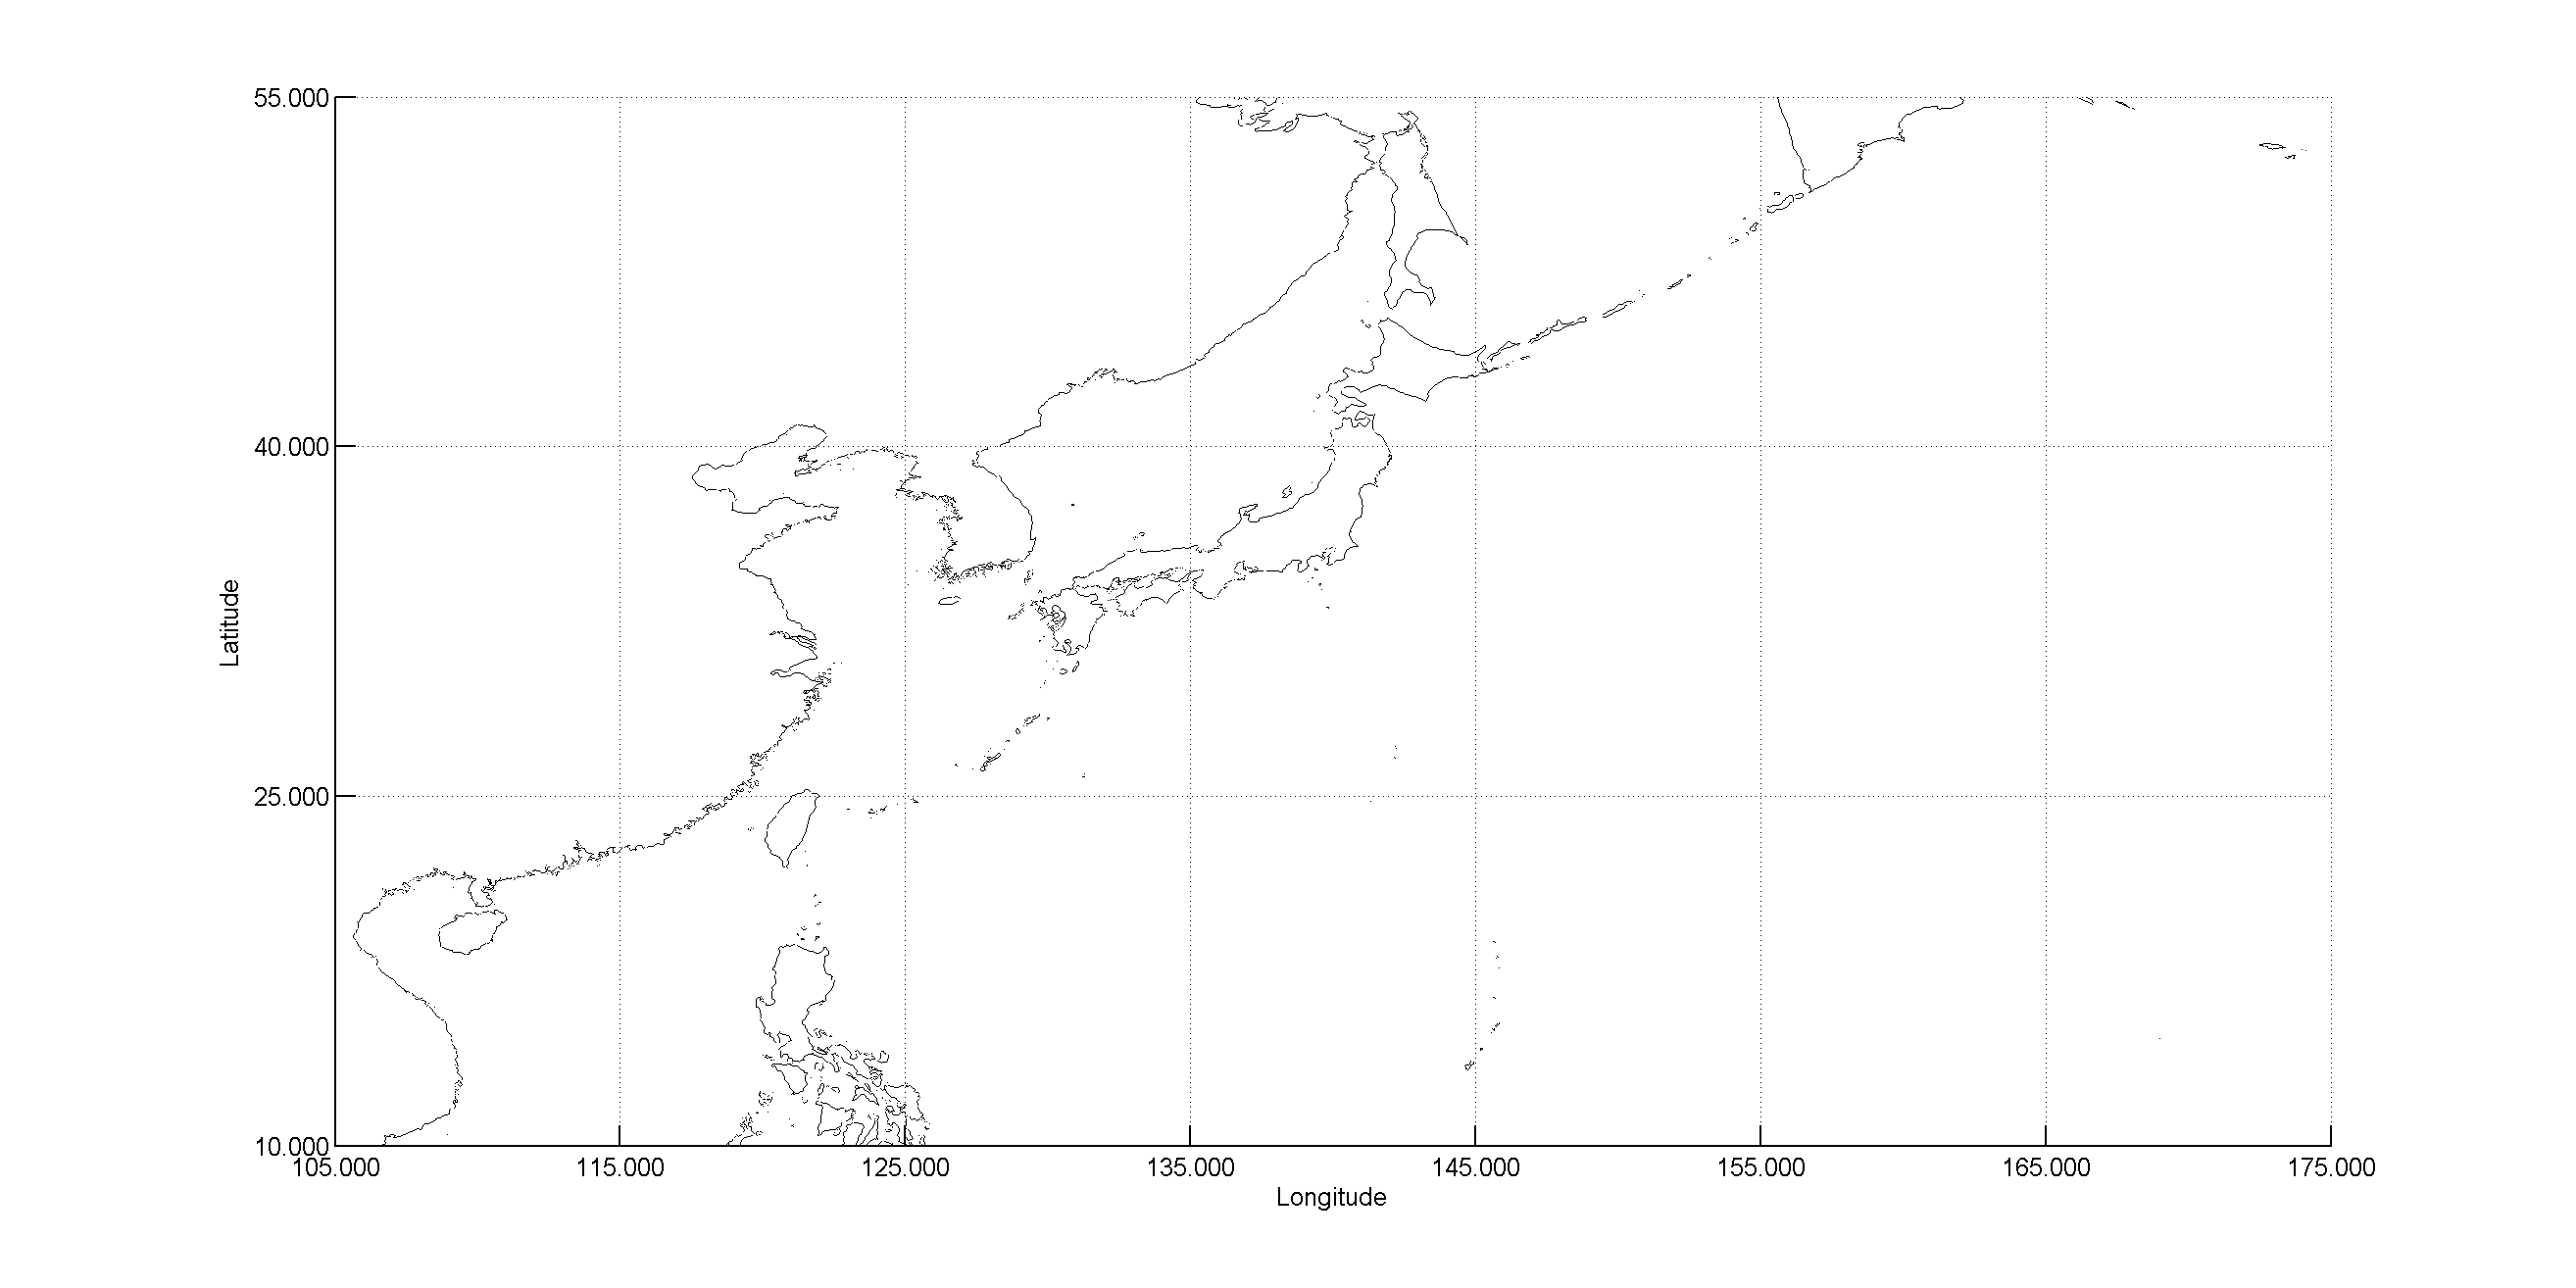 CYCLE_144 - Japan Descending passes